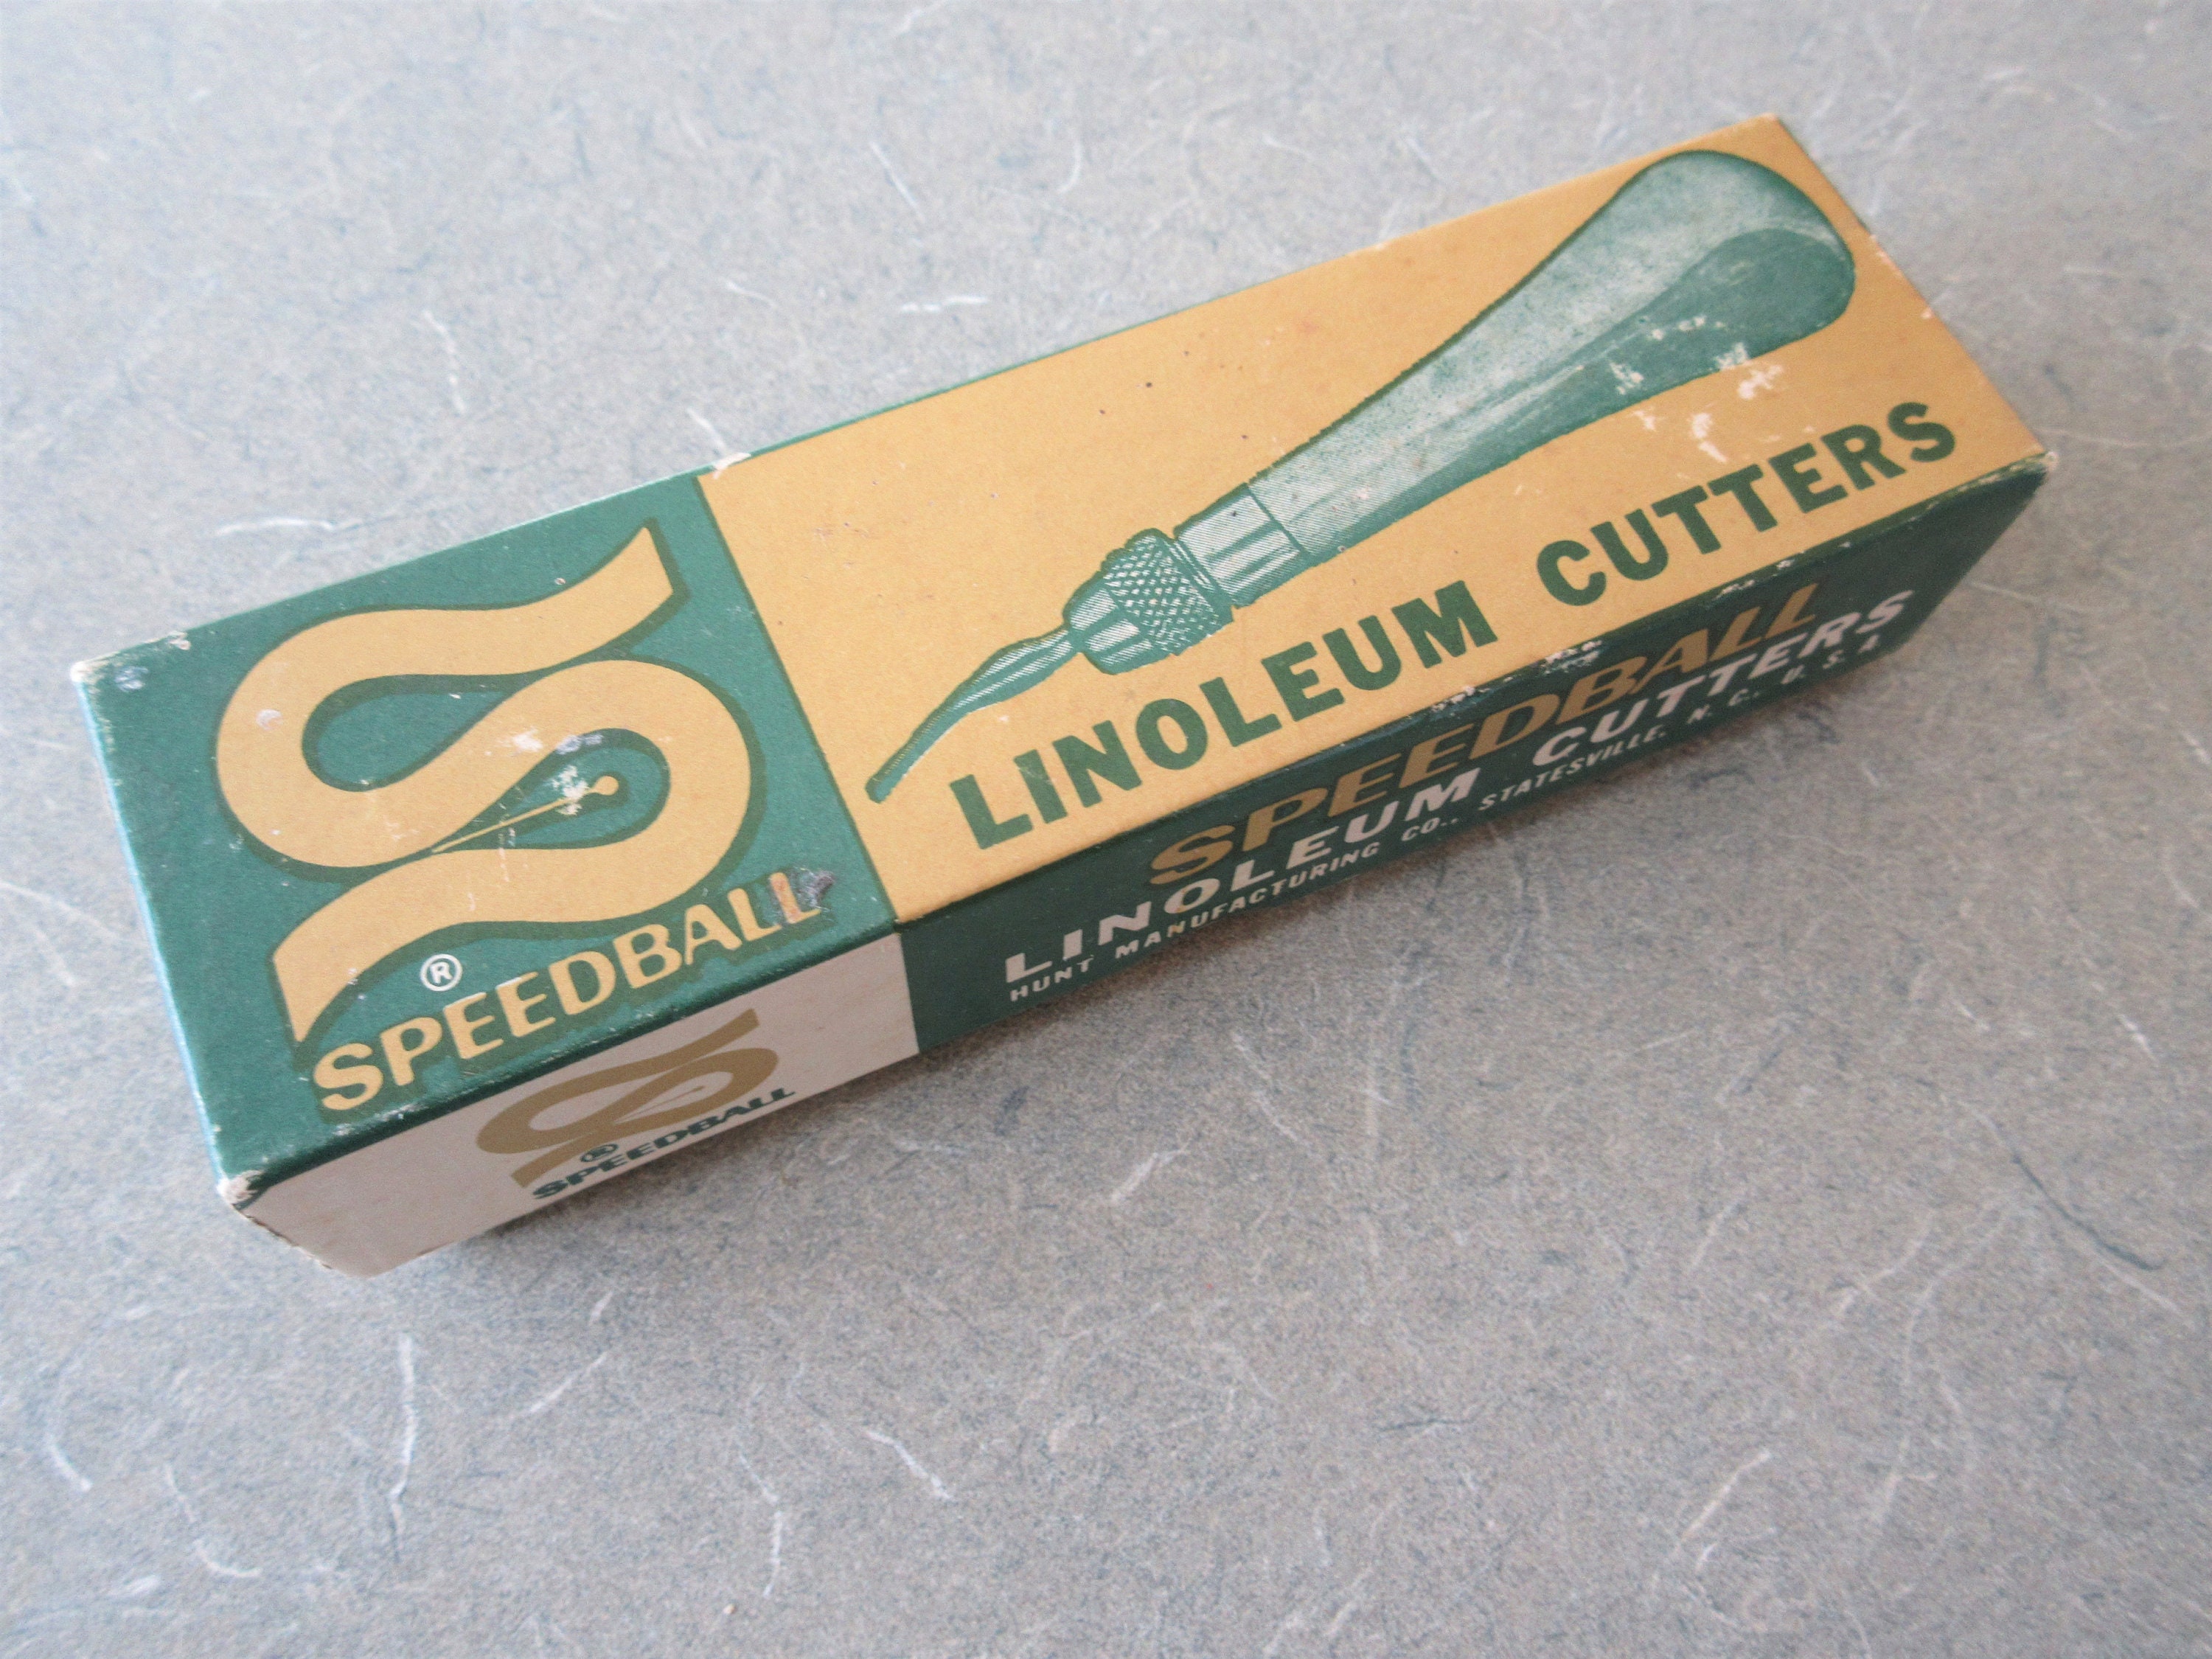 Speedball Linoleum Cutters